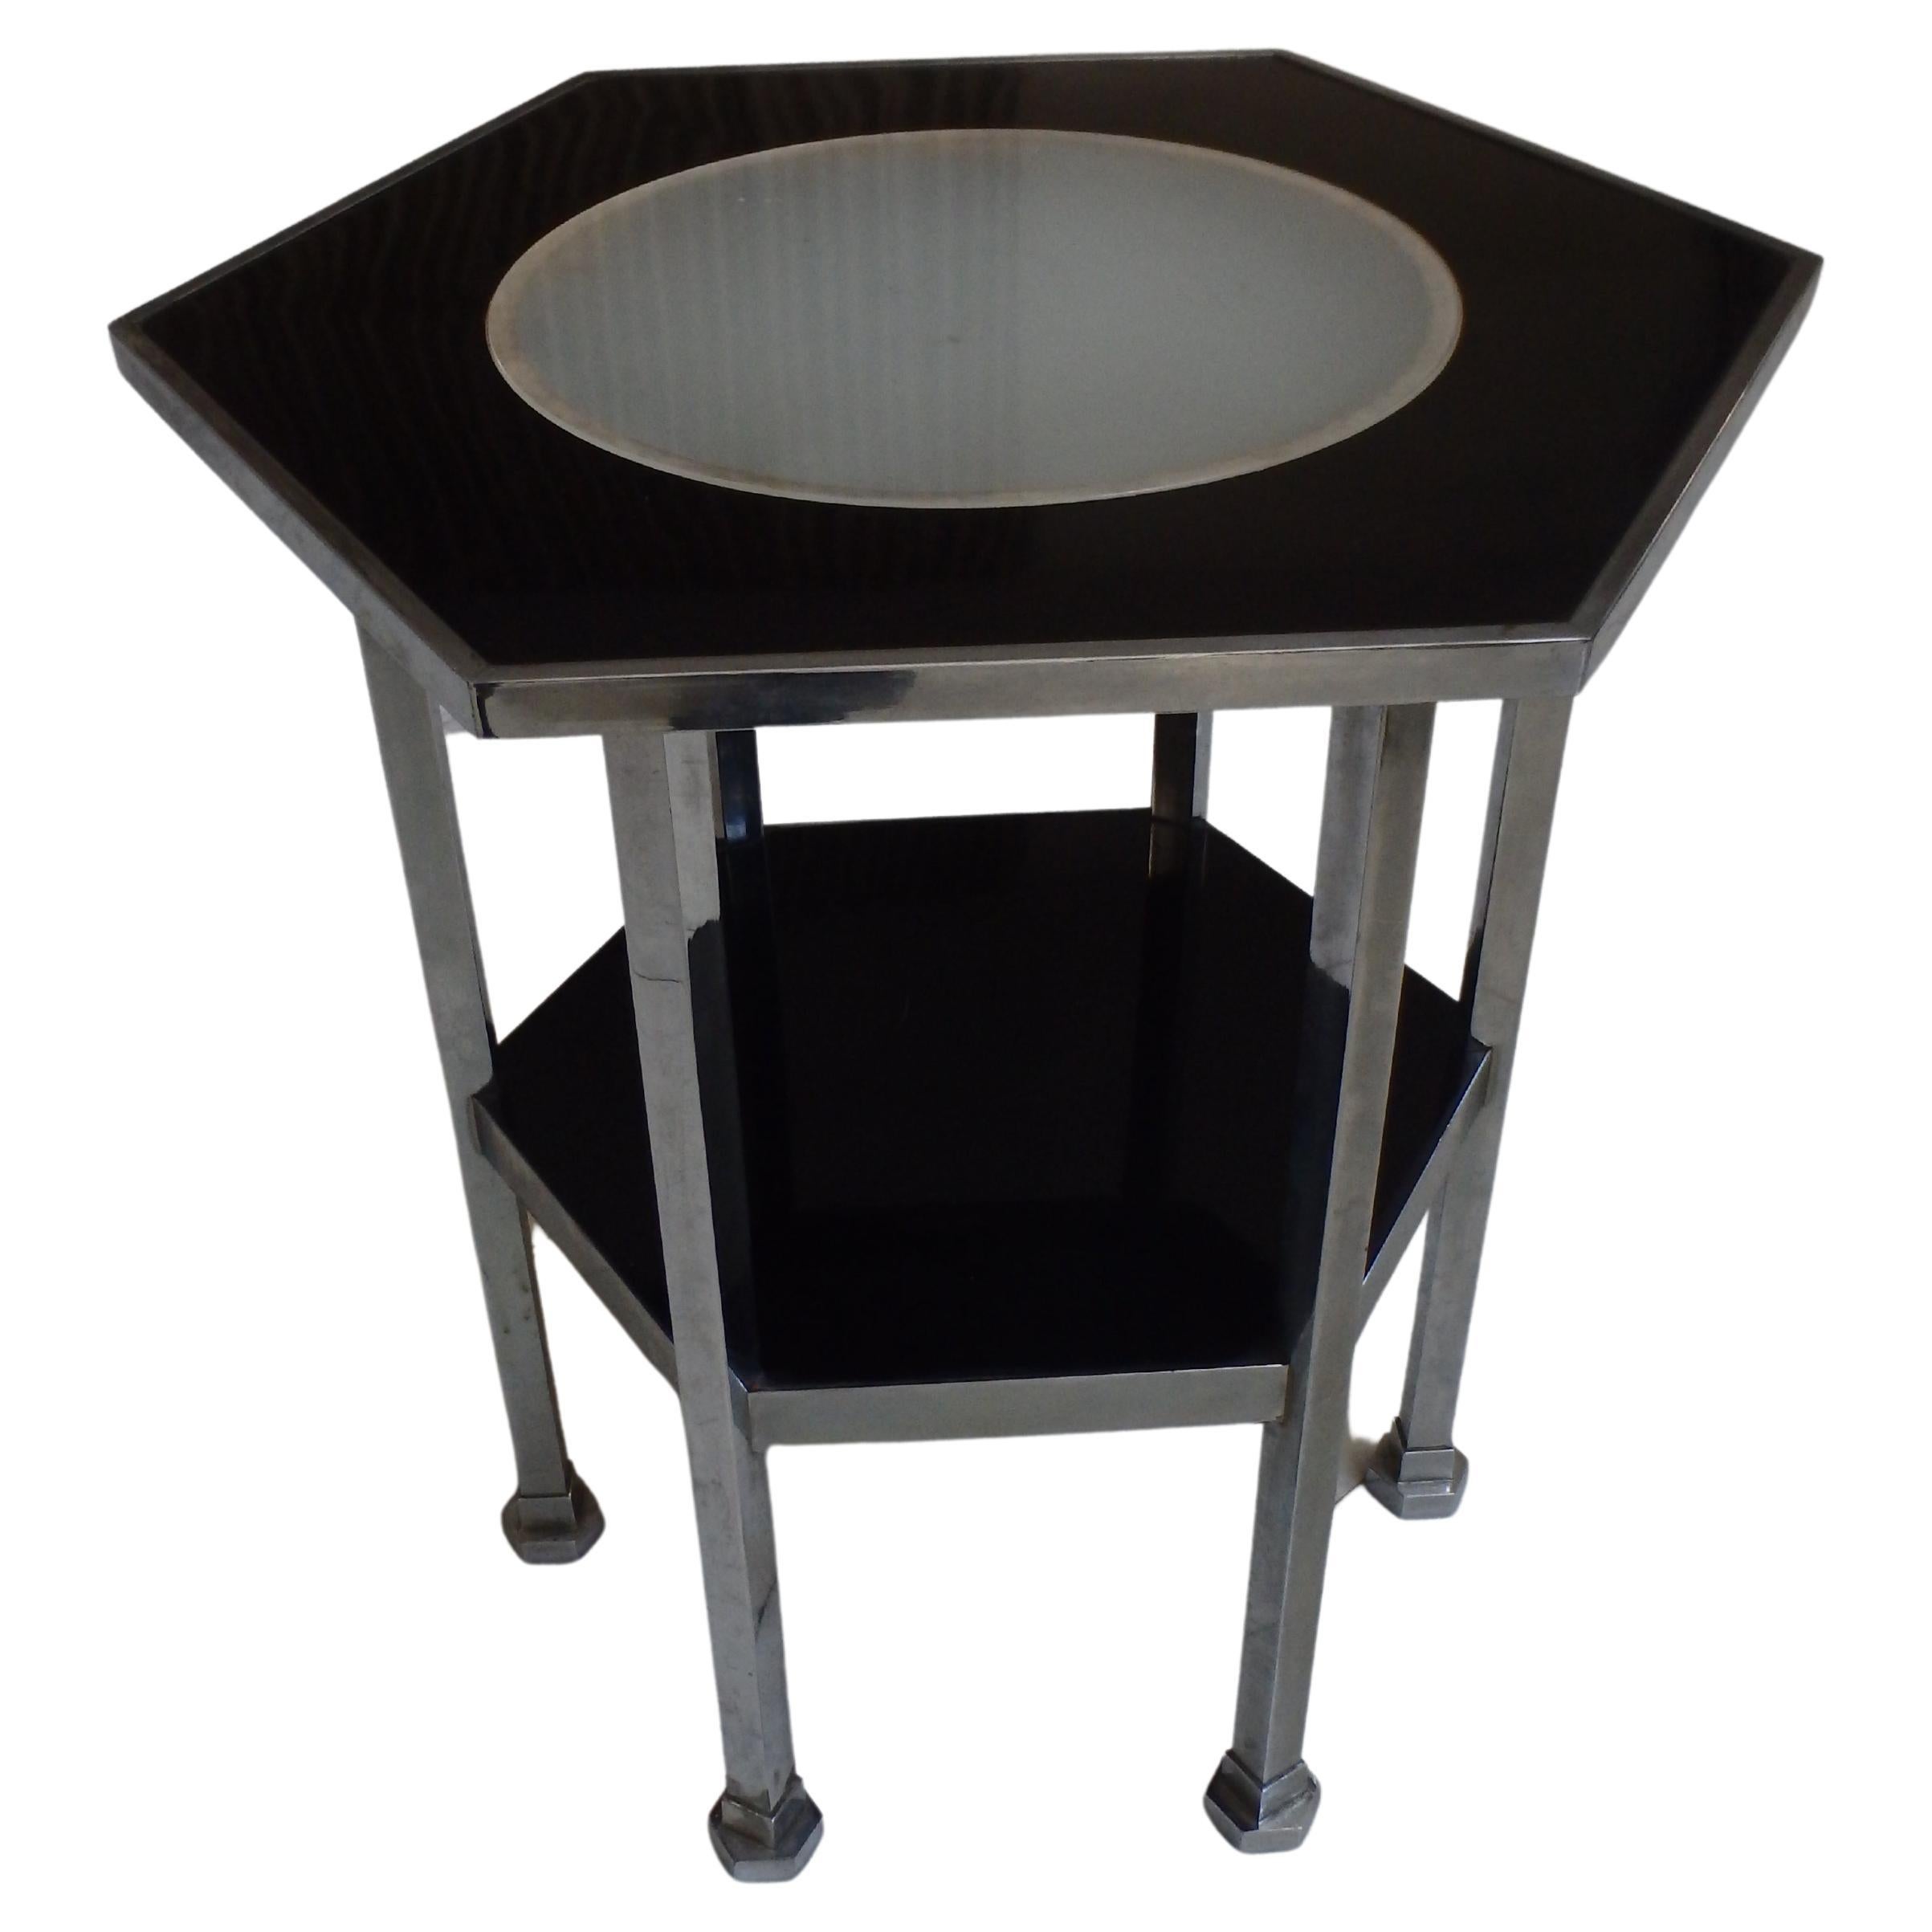 Bauhaus 2 Top Table with Light Inside Chrome and Black Bakelite Model "Sultane" For Sale